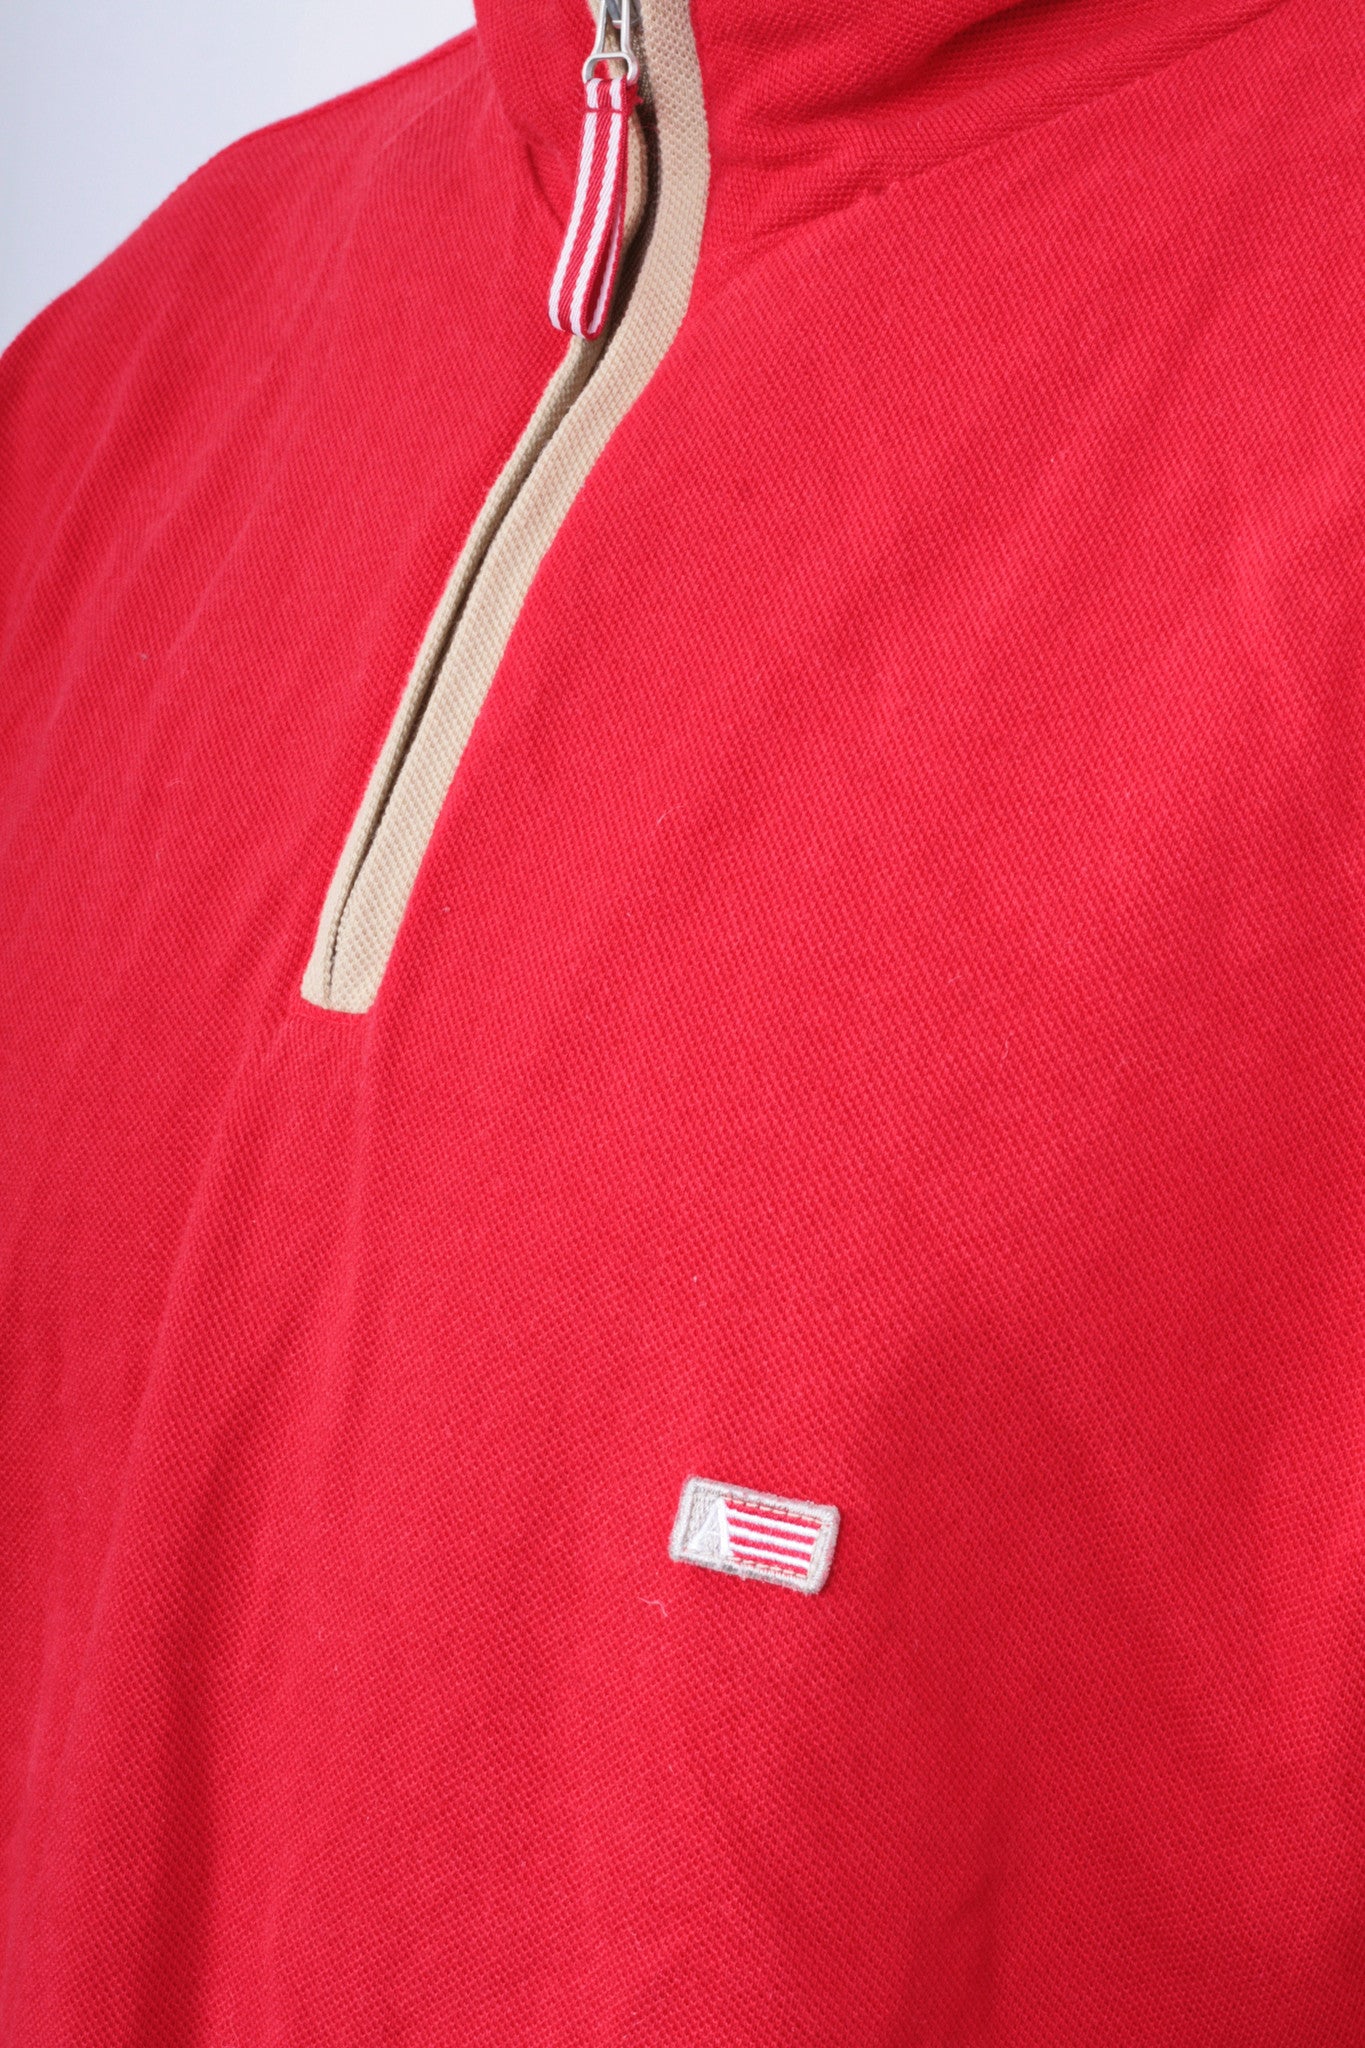 Arrow Americas Sport Mens XL Polo Shirt Red Cotton Top Zip Neck - RetrospectClothes